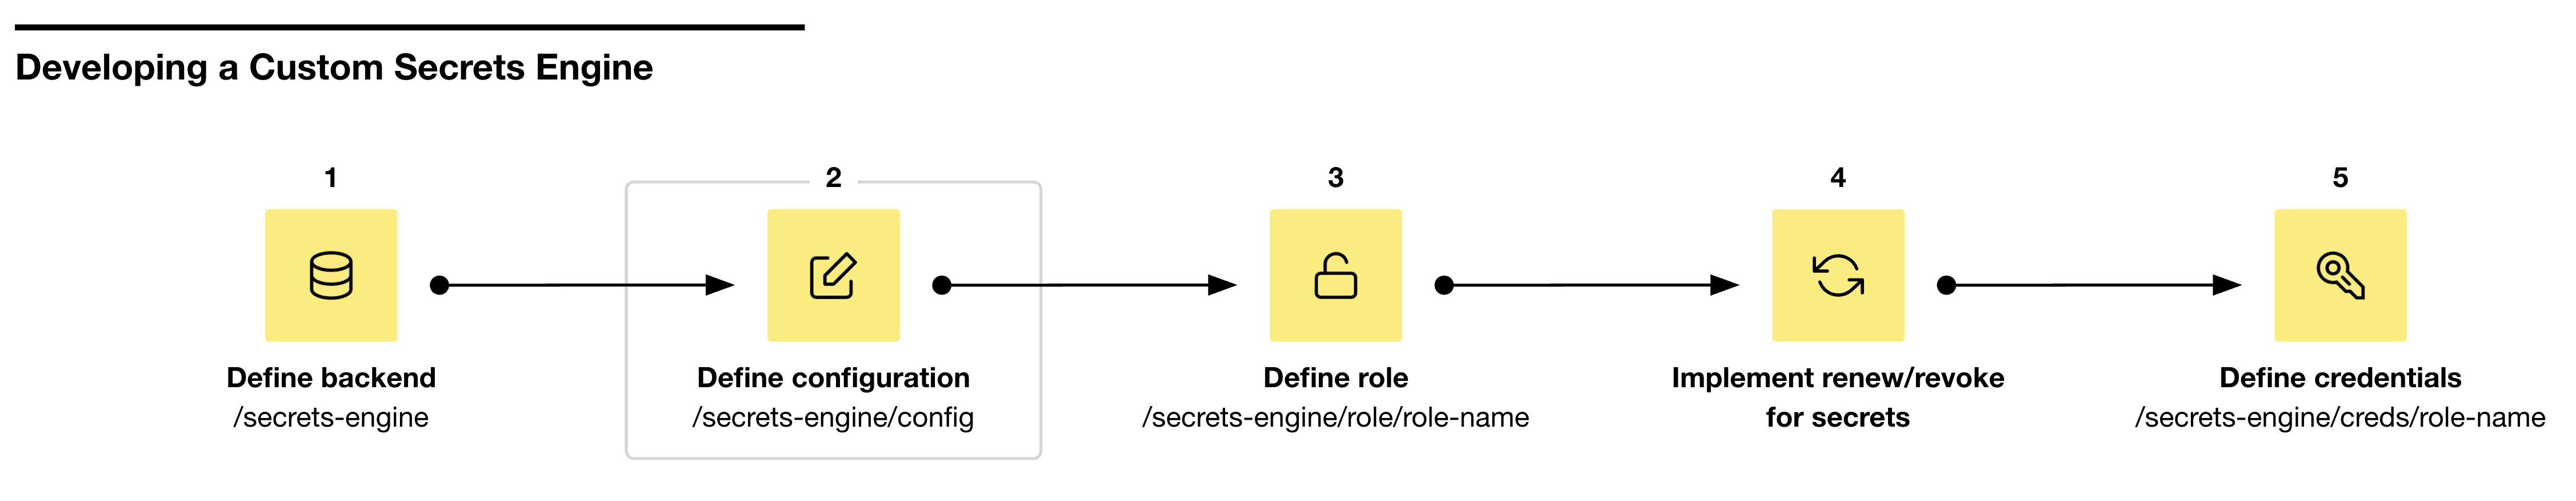 Step 2 defines a secrets engine configuration at /secrets-engine/config